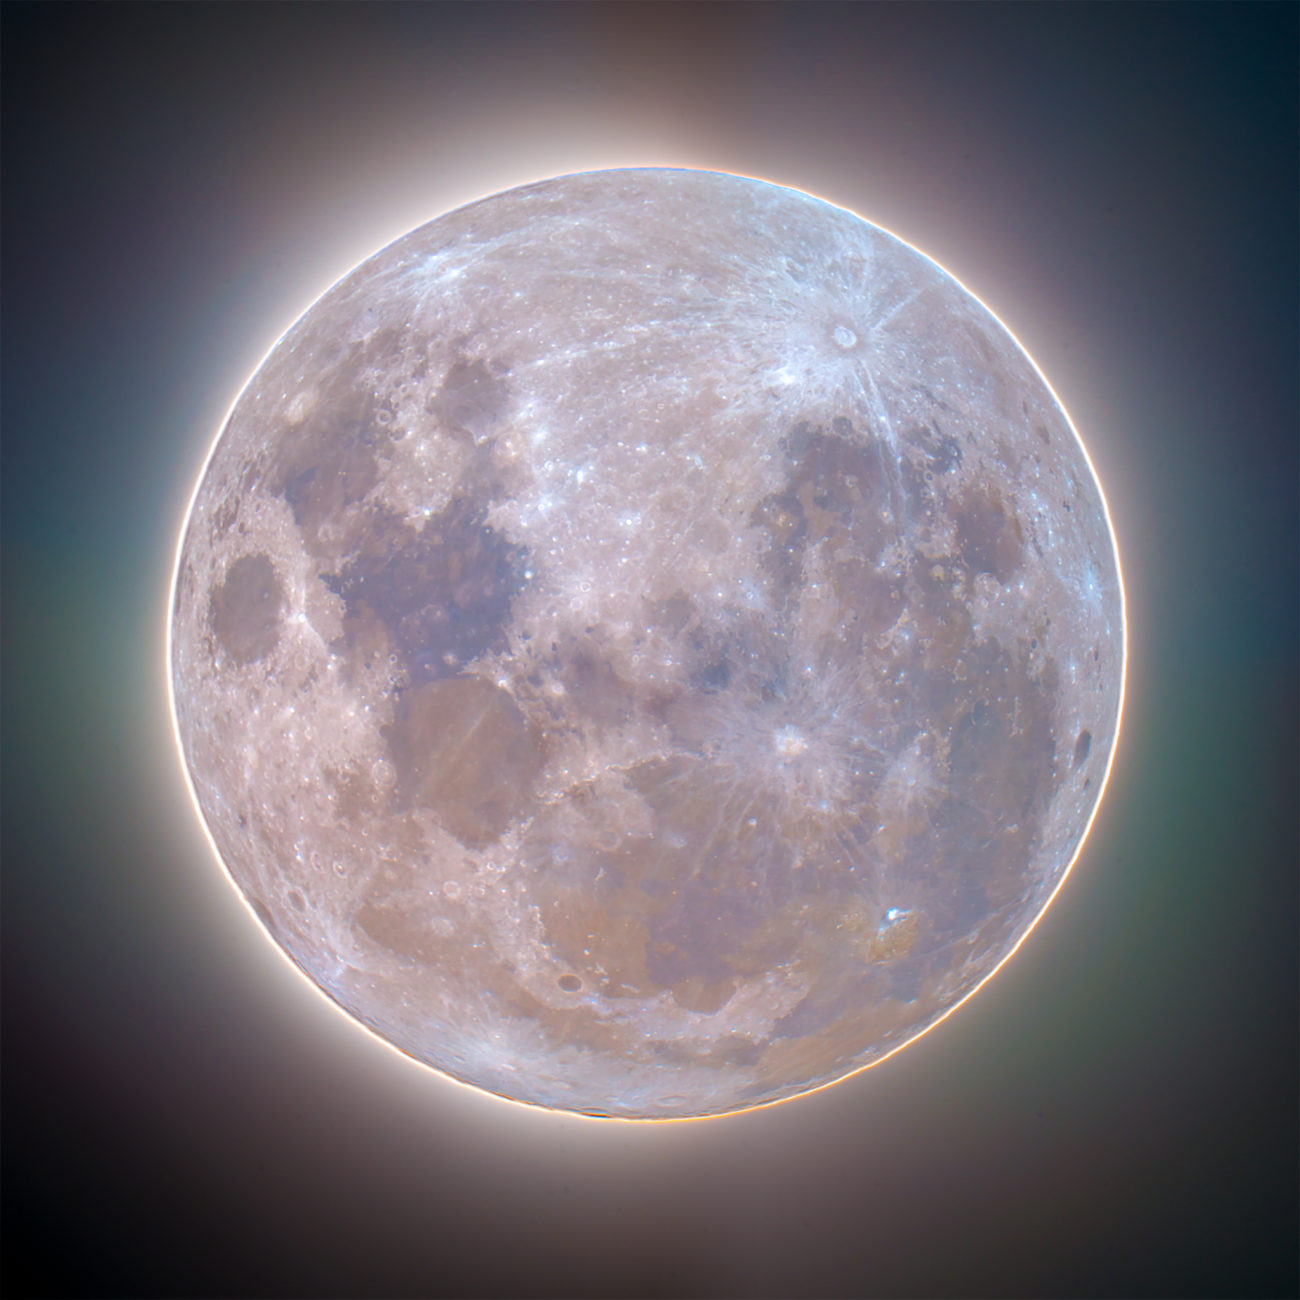 lunar moon